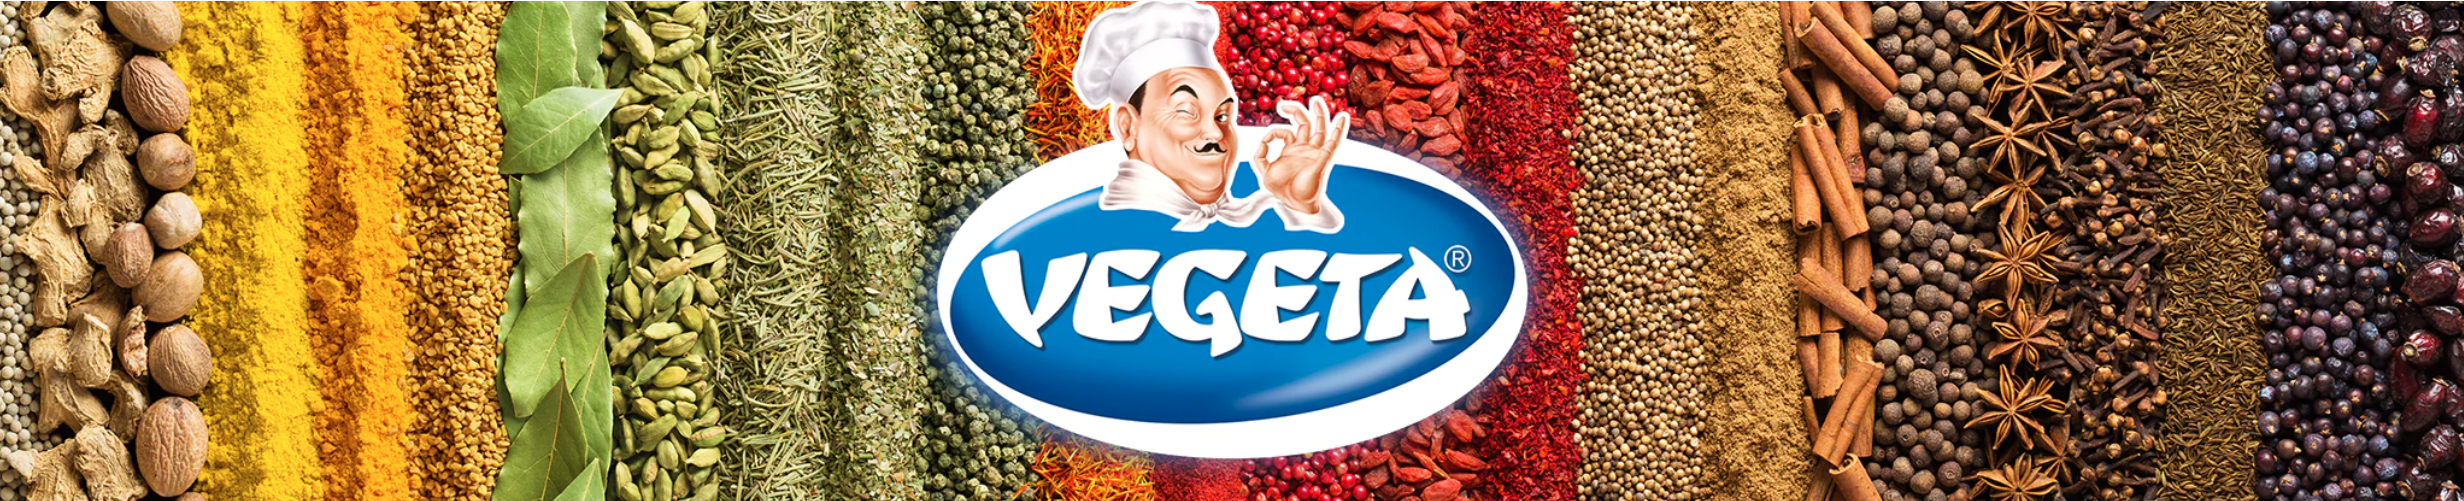 Vegeta Seasoning - Global Imports & Exports Wholesale